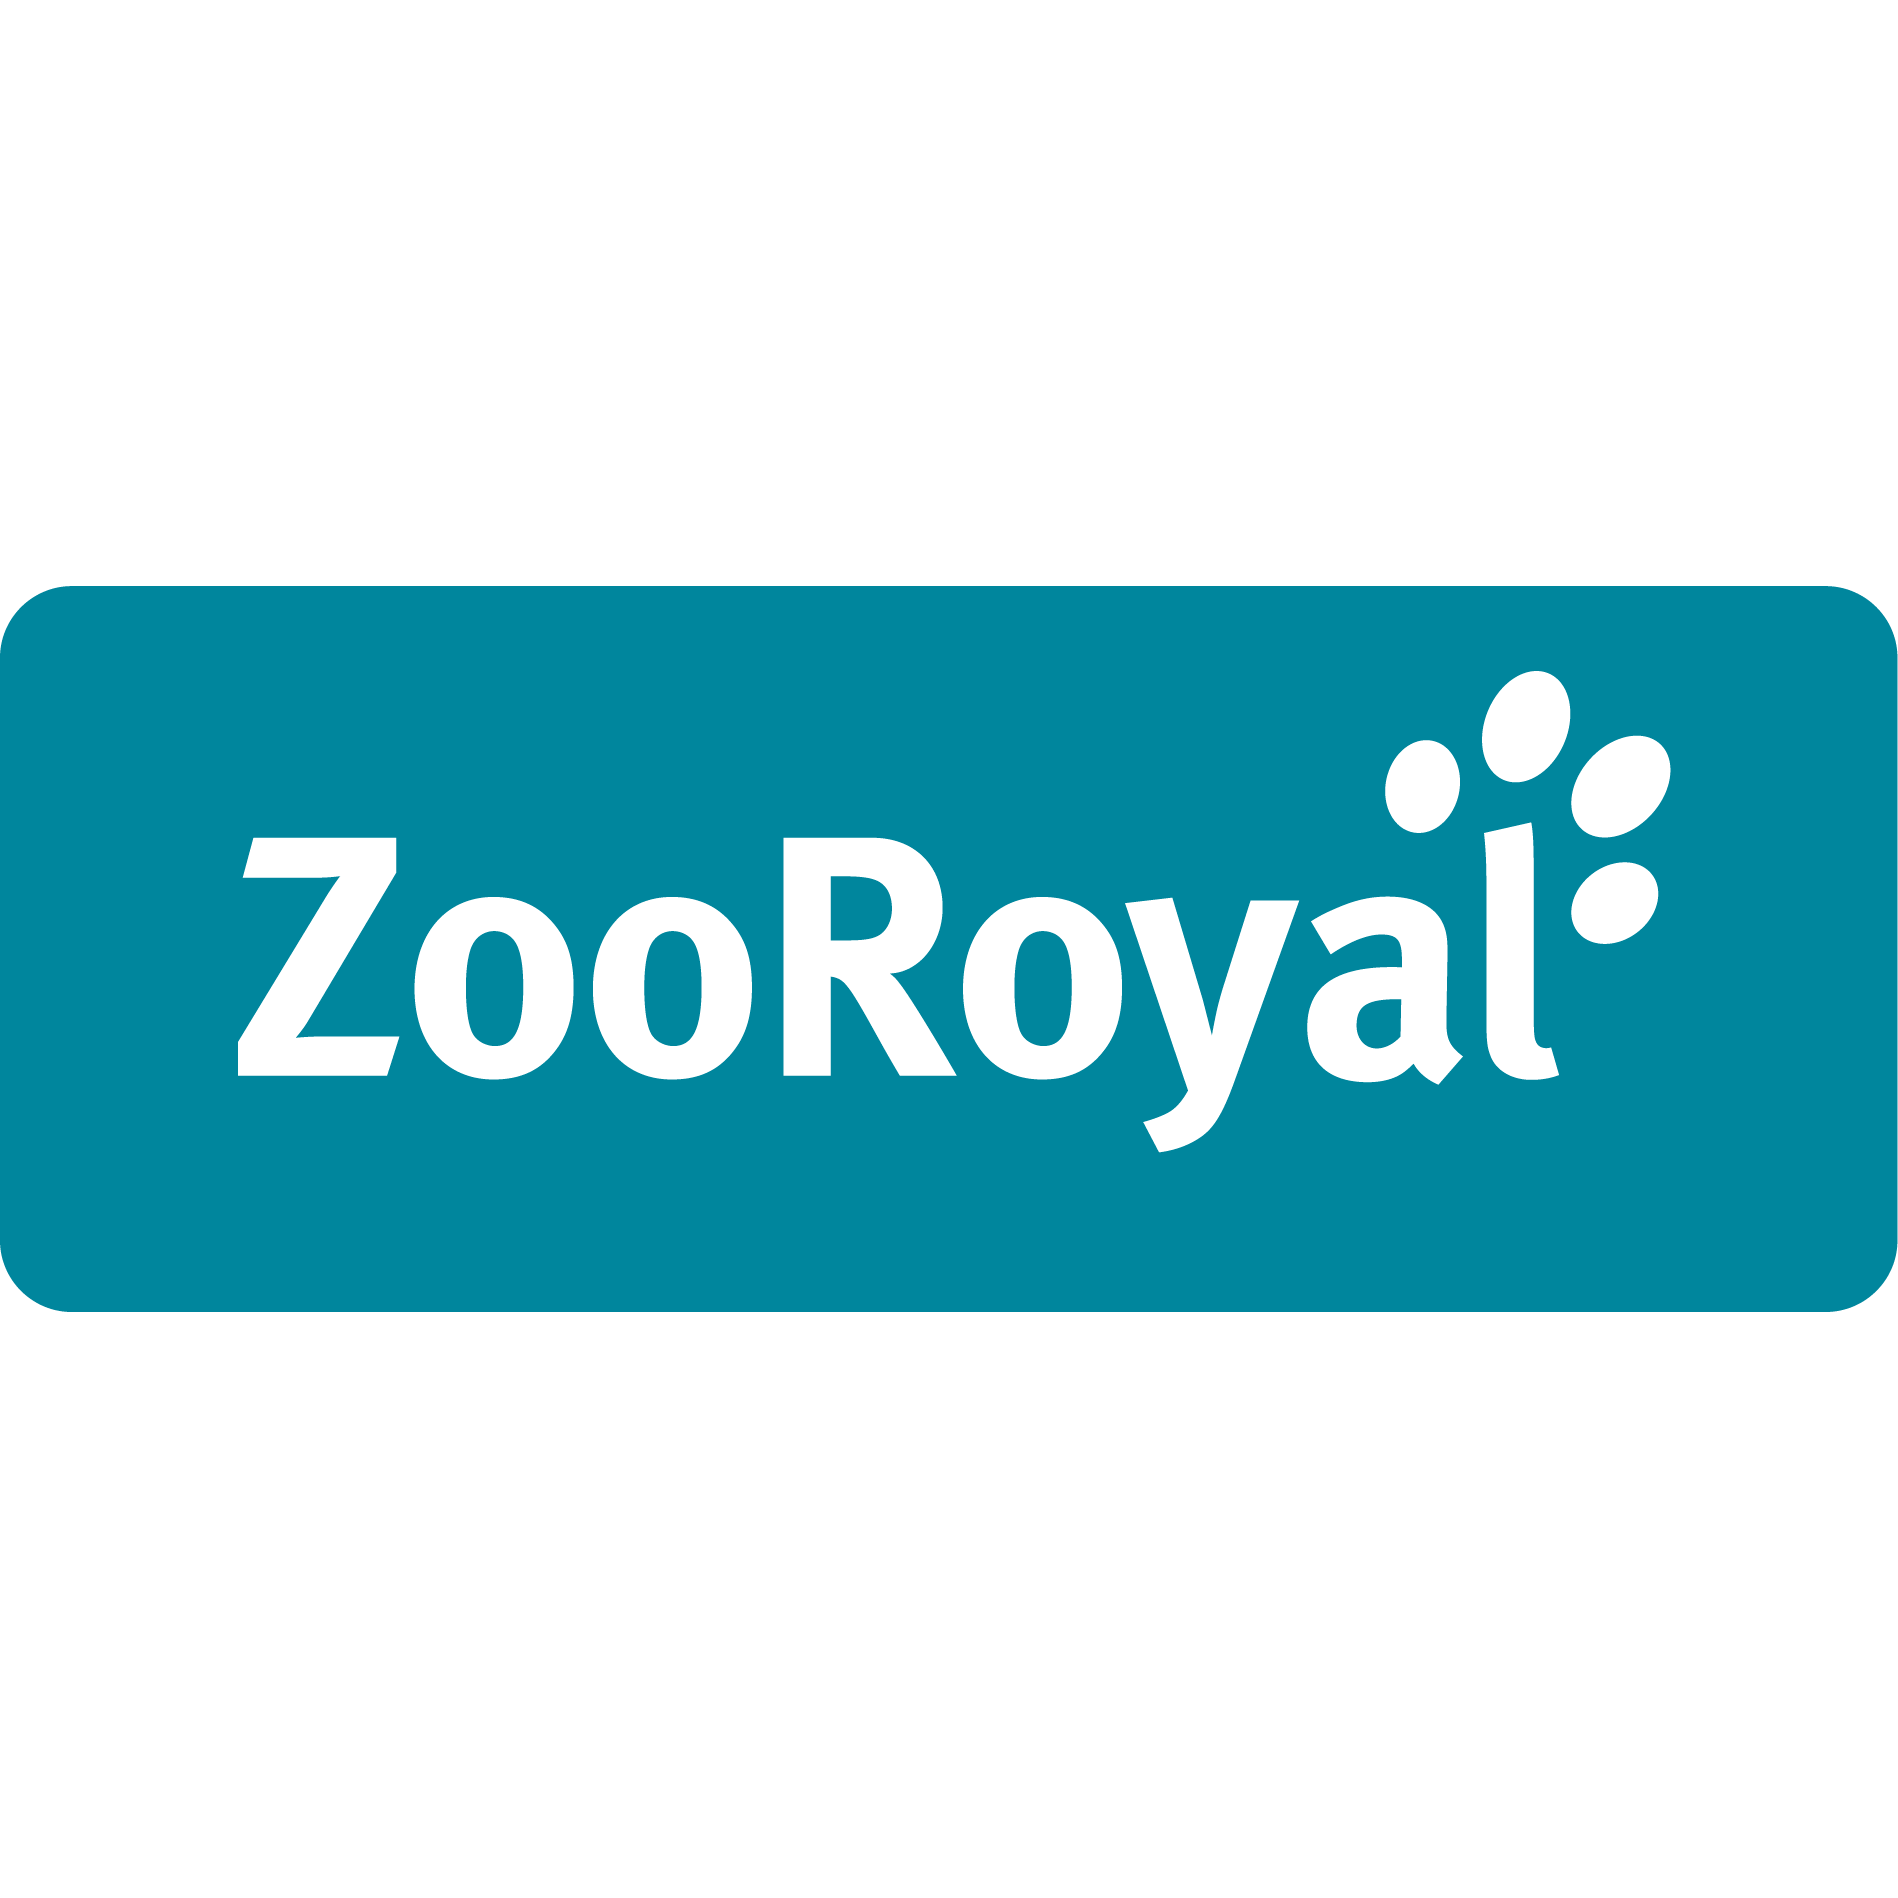 Logo von ZooRoyal